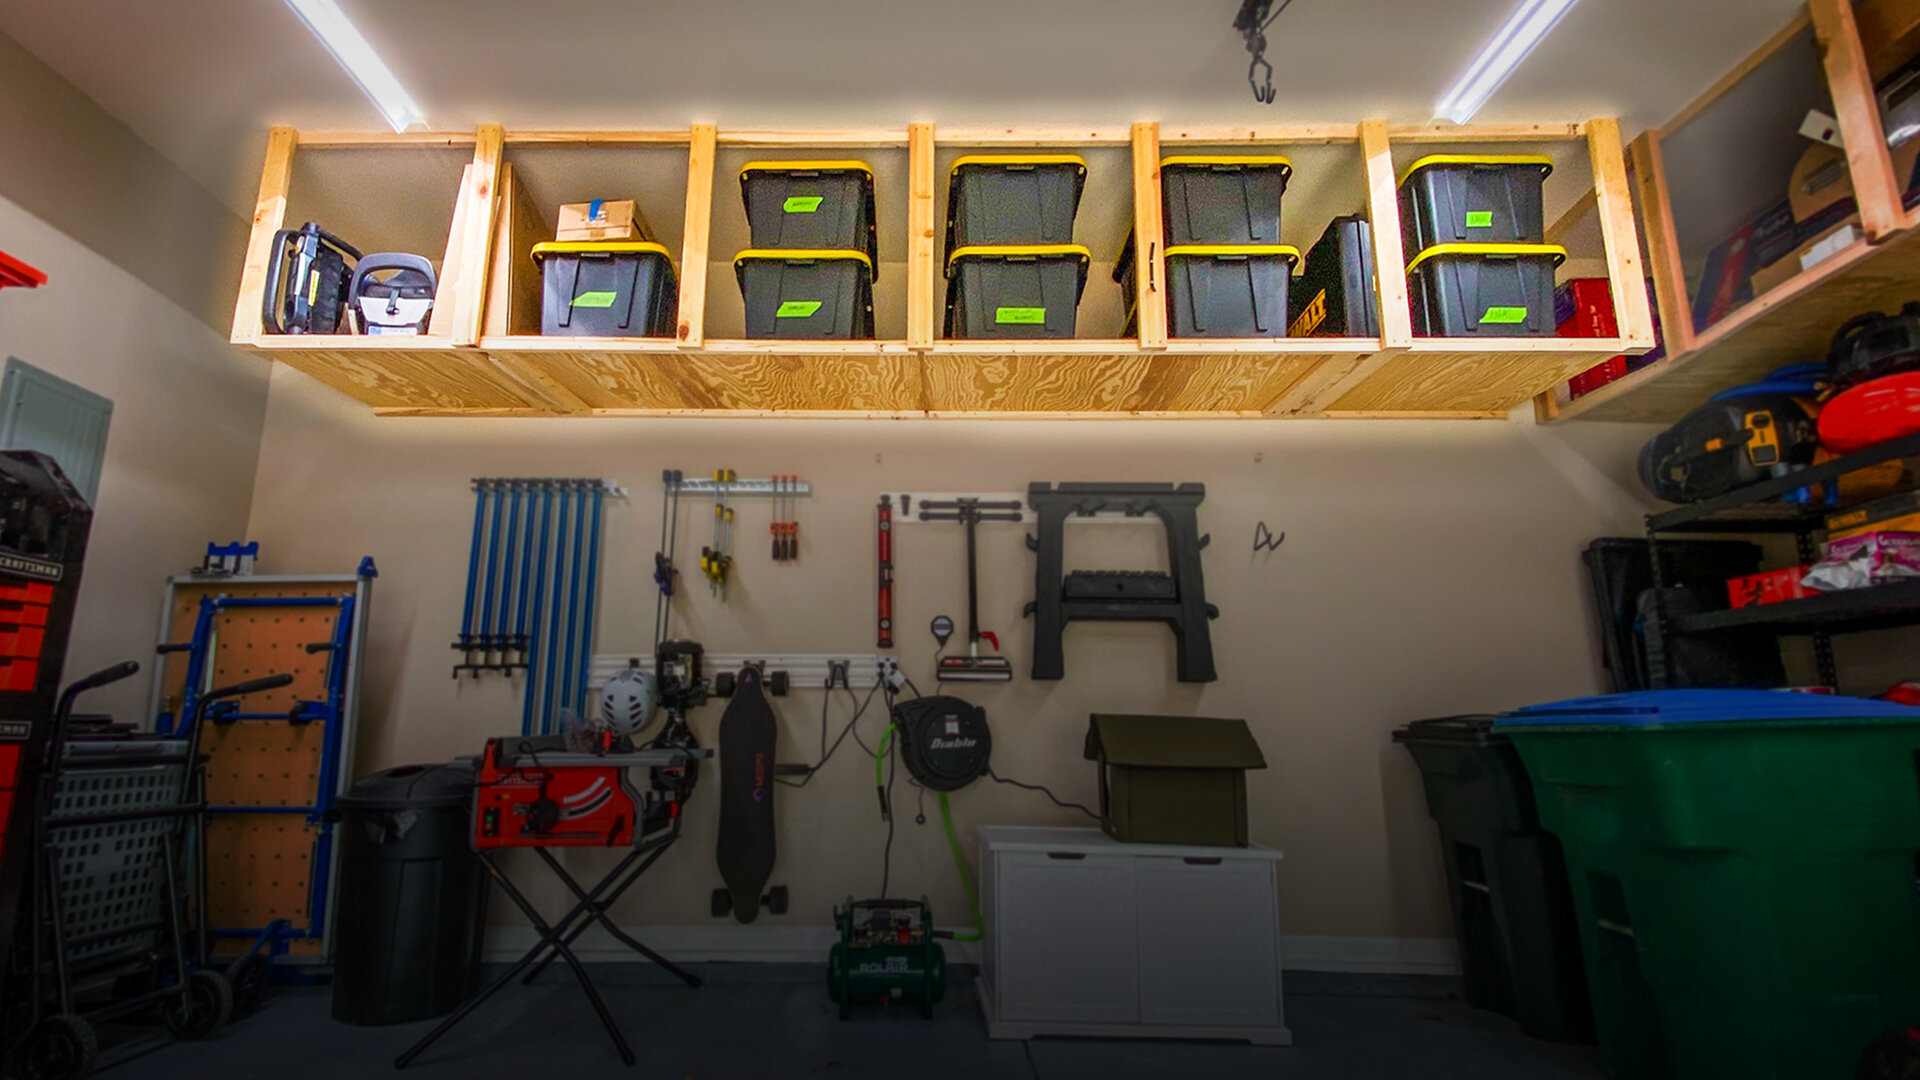 How To Build Diy Garage Storage Shelves, How To Build Shelves In Garage Ceiling